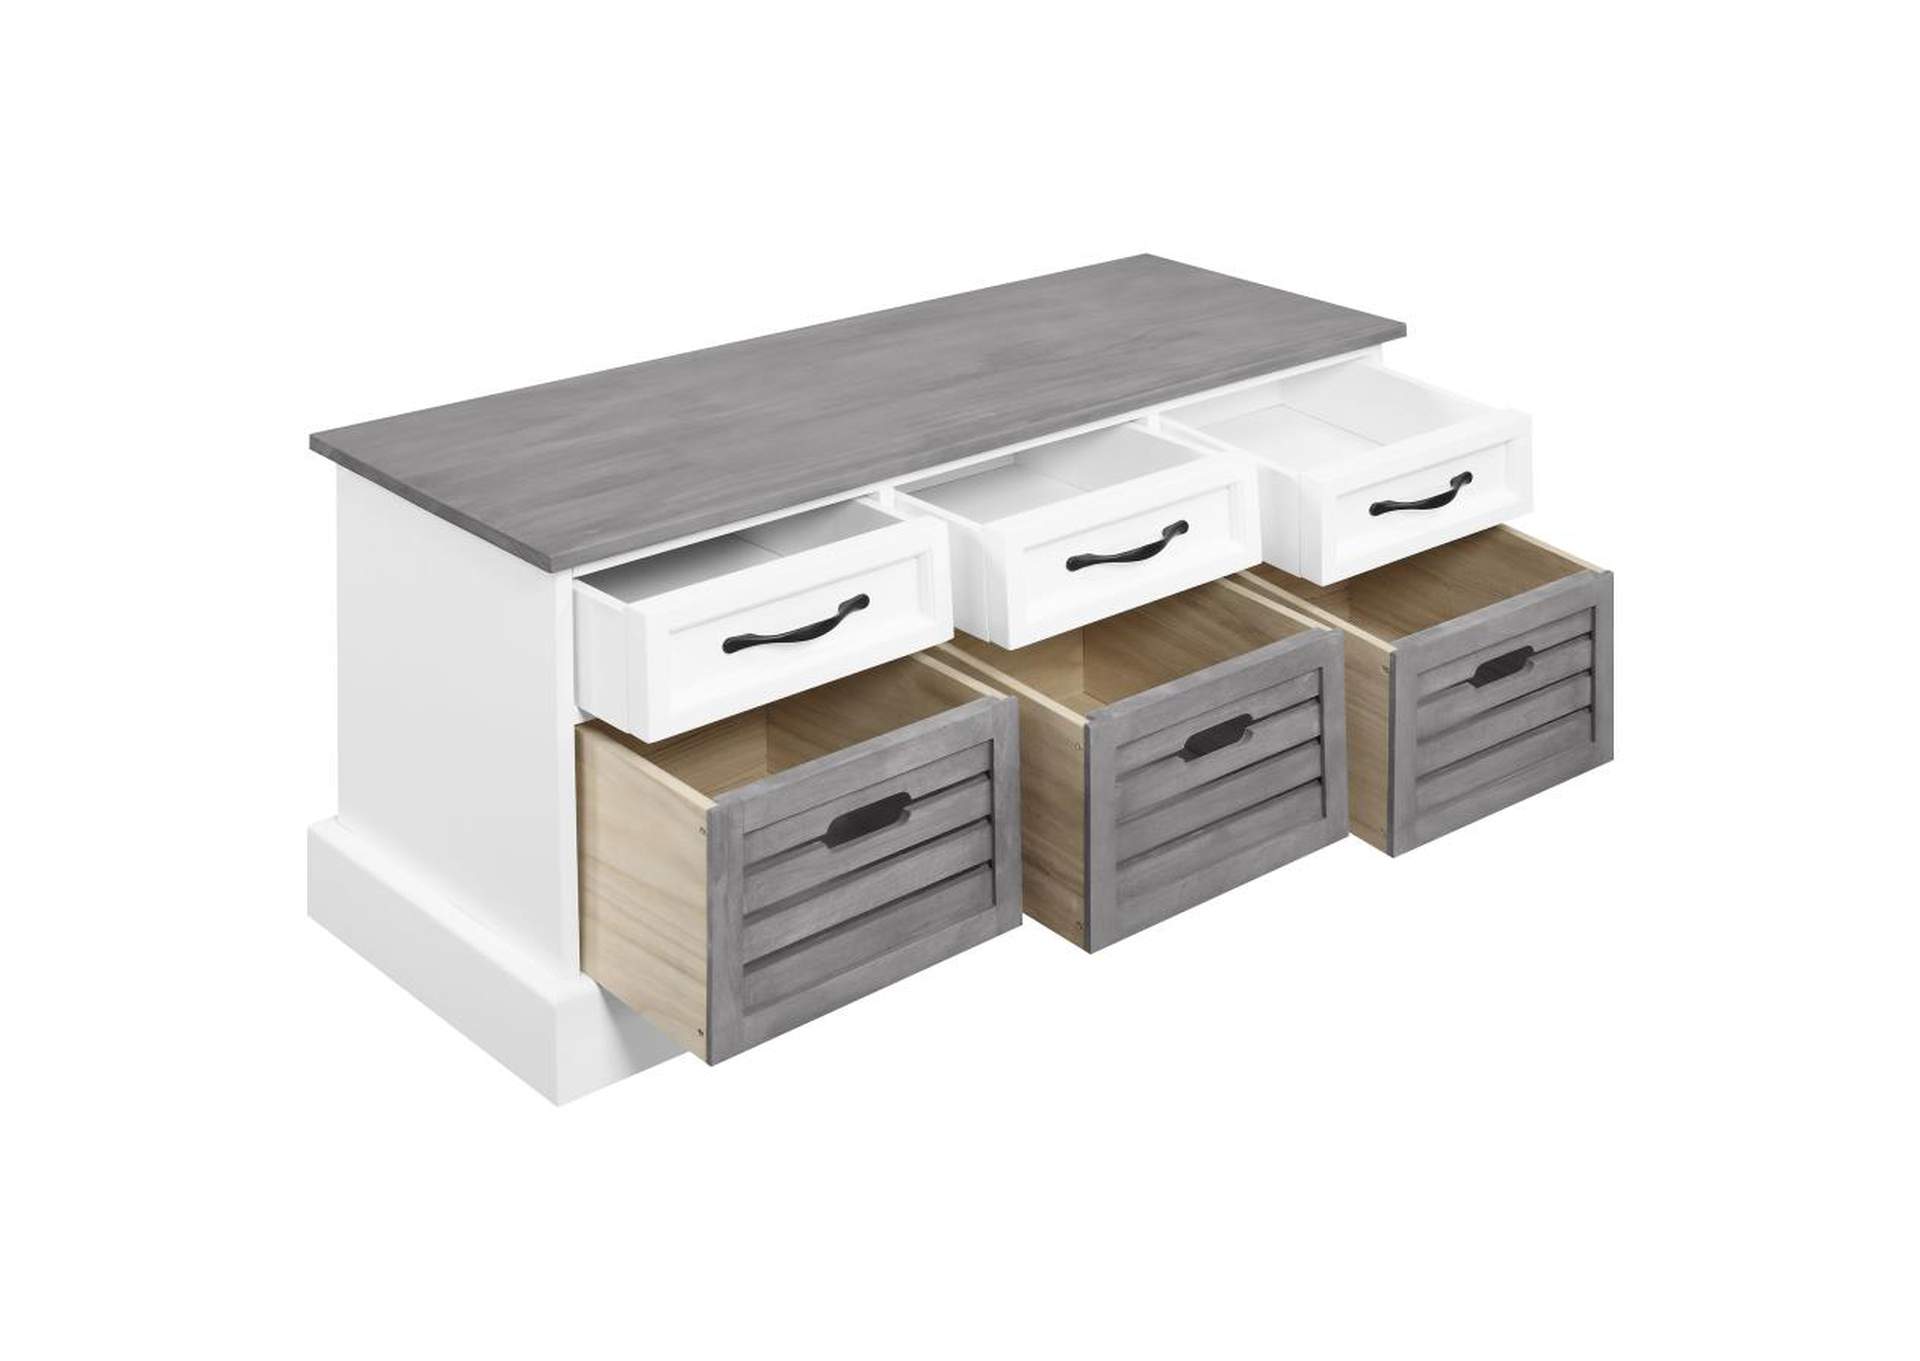 Alma 3 - drawer Storage Bench White and Weathered Grey,Coaster Furniture